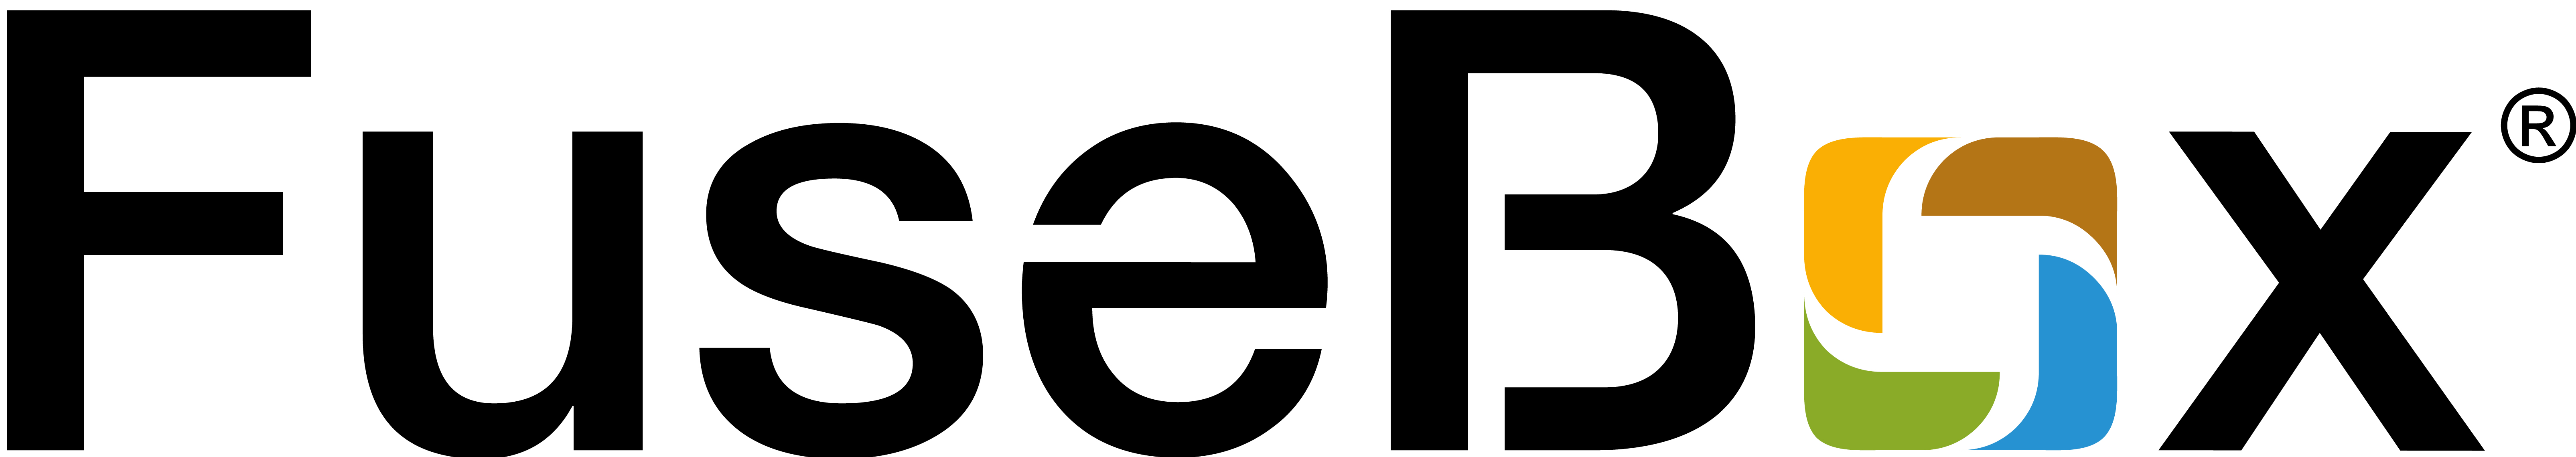 FuseBox logo